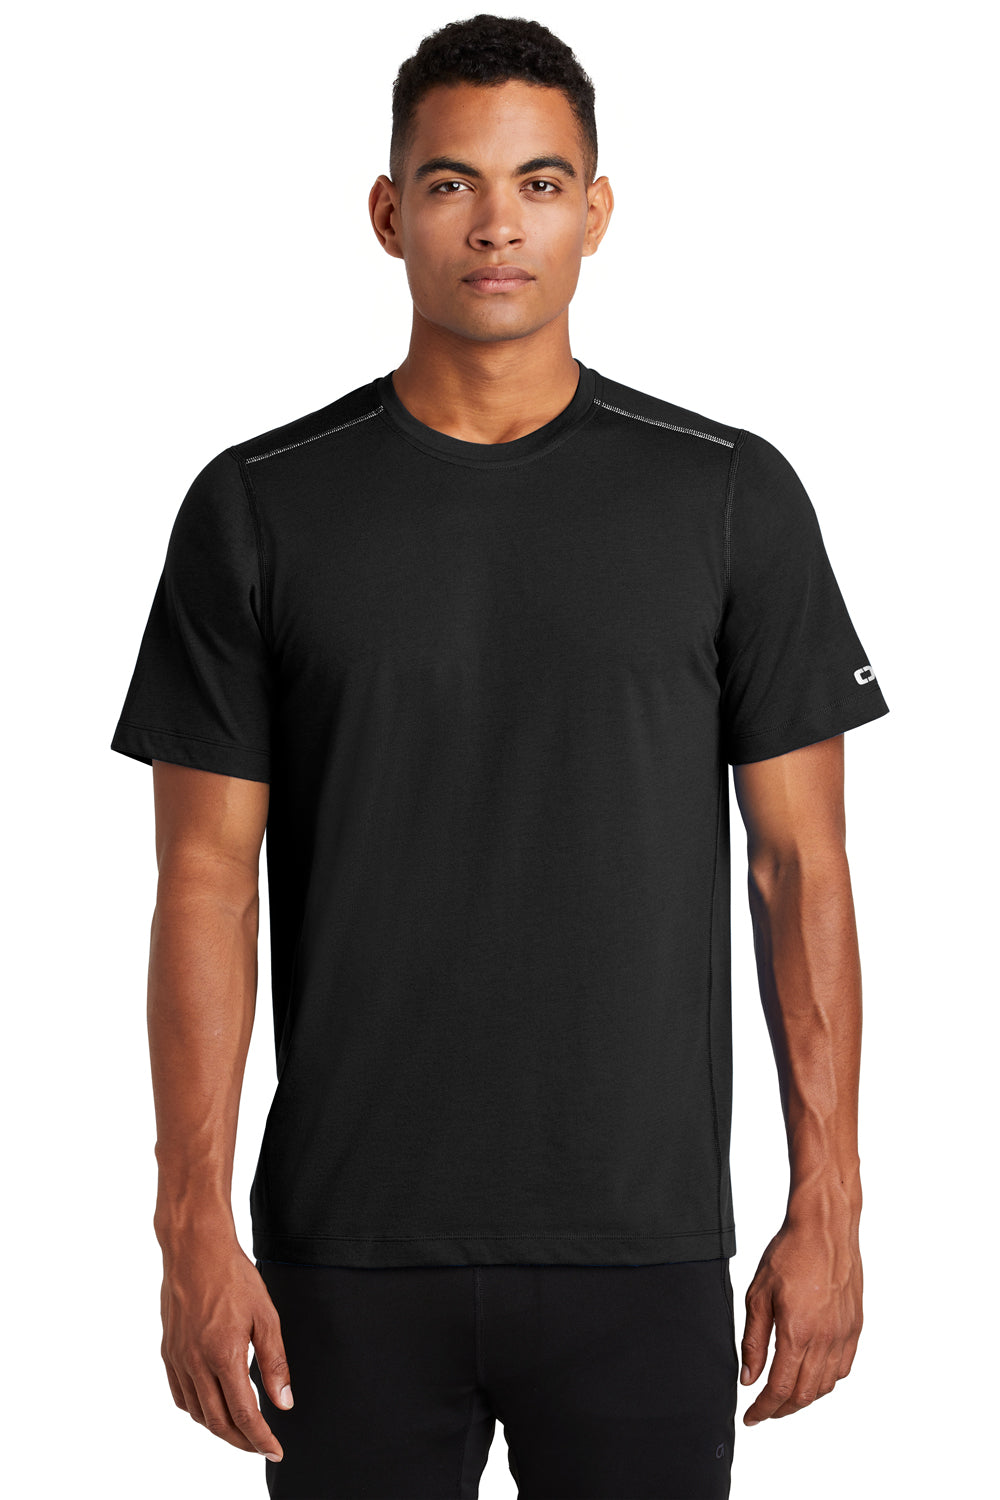 Ogio OE336 Mens Endurance Peak Jersey Moisture Wicking Short Sleeve Crewneck T-Shirt Black Front